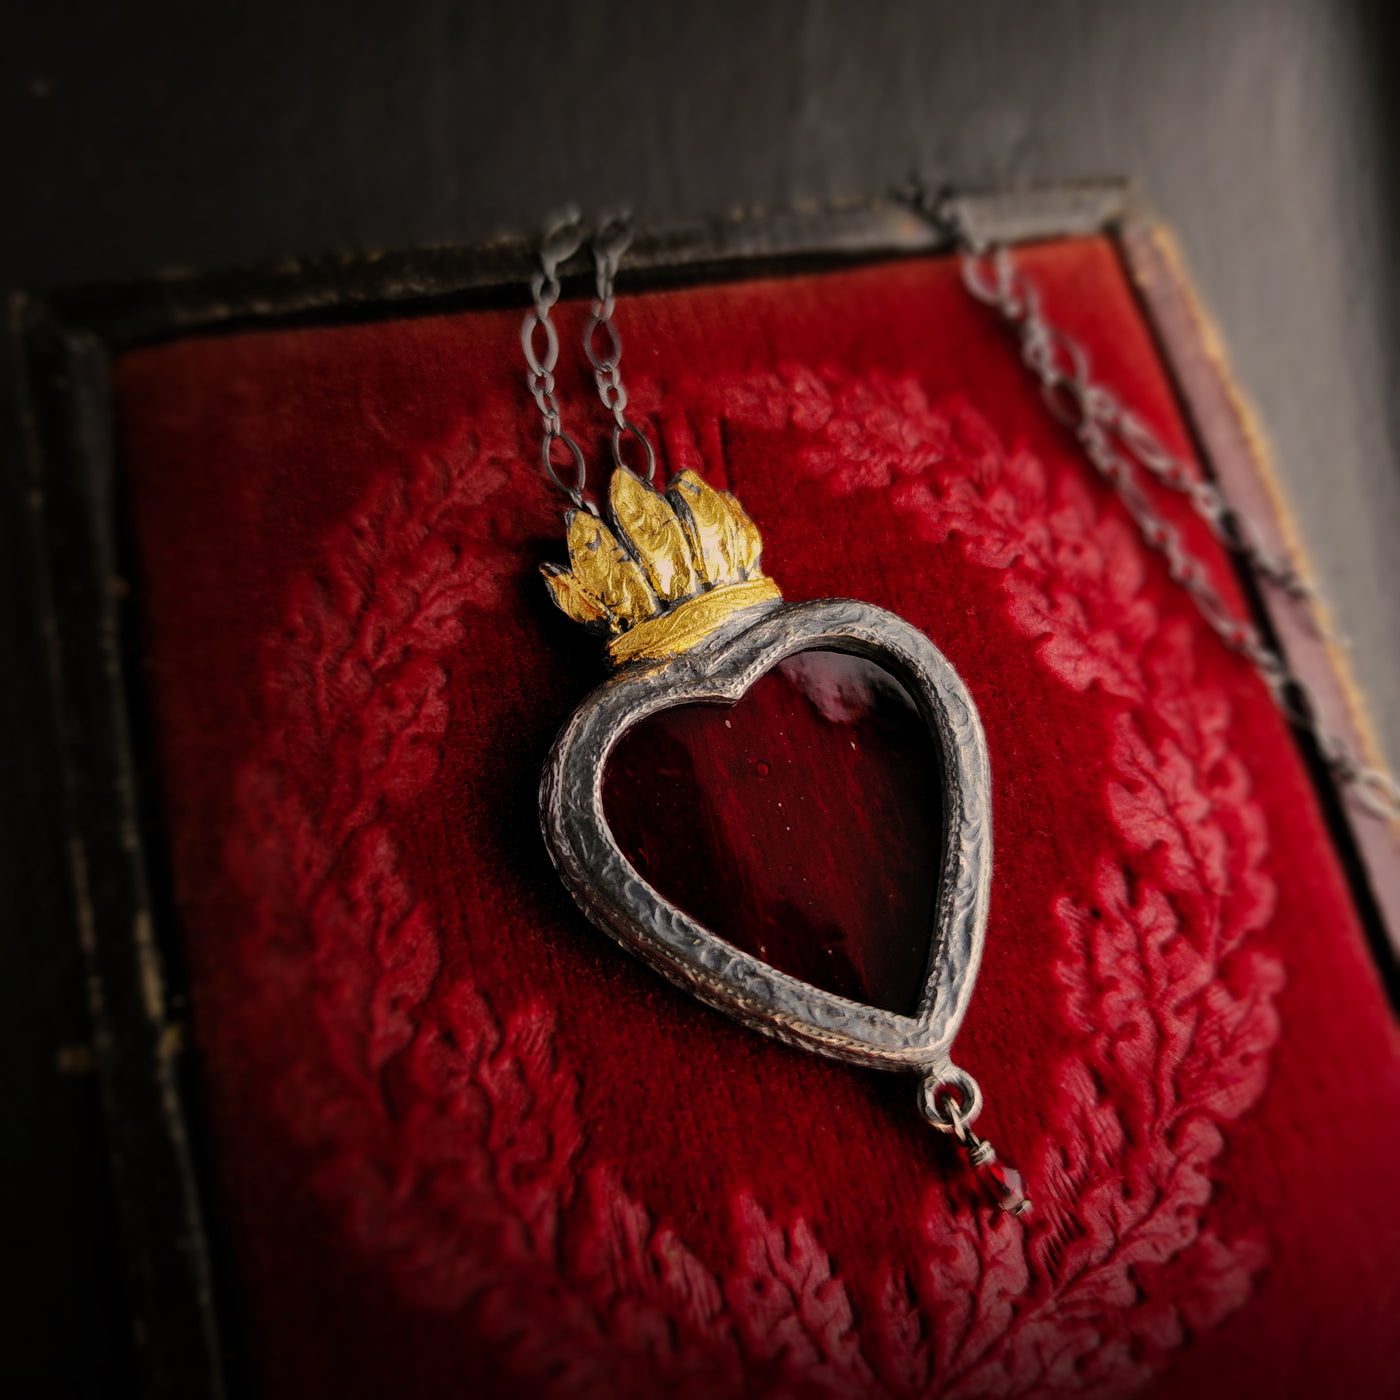 fiamma d'oro - sacred heart amulet